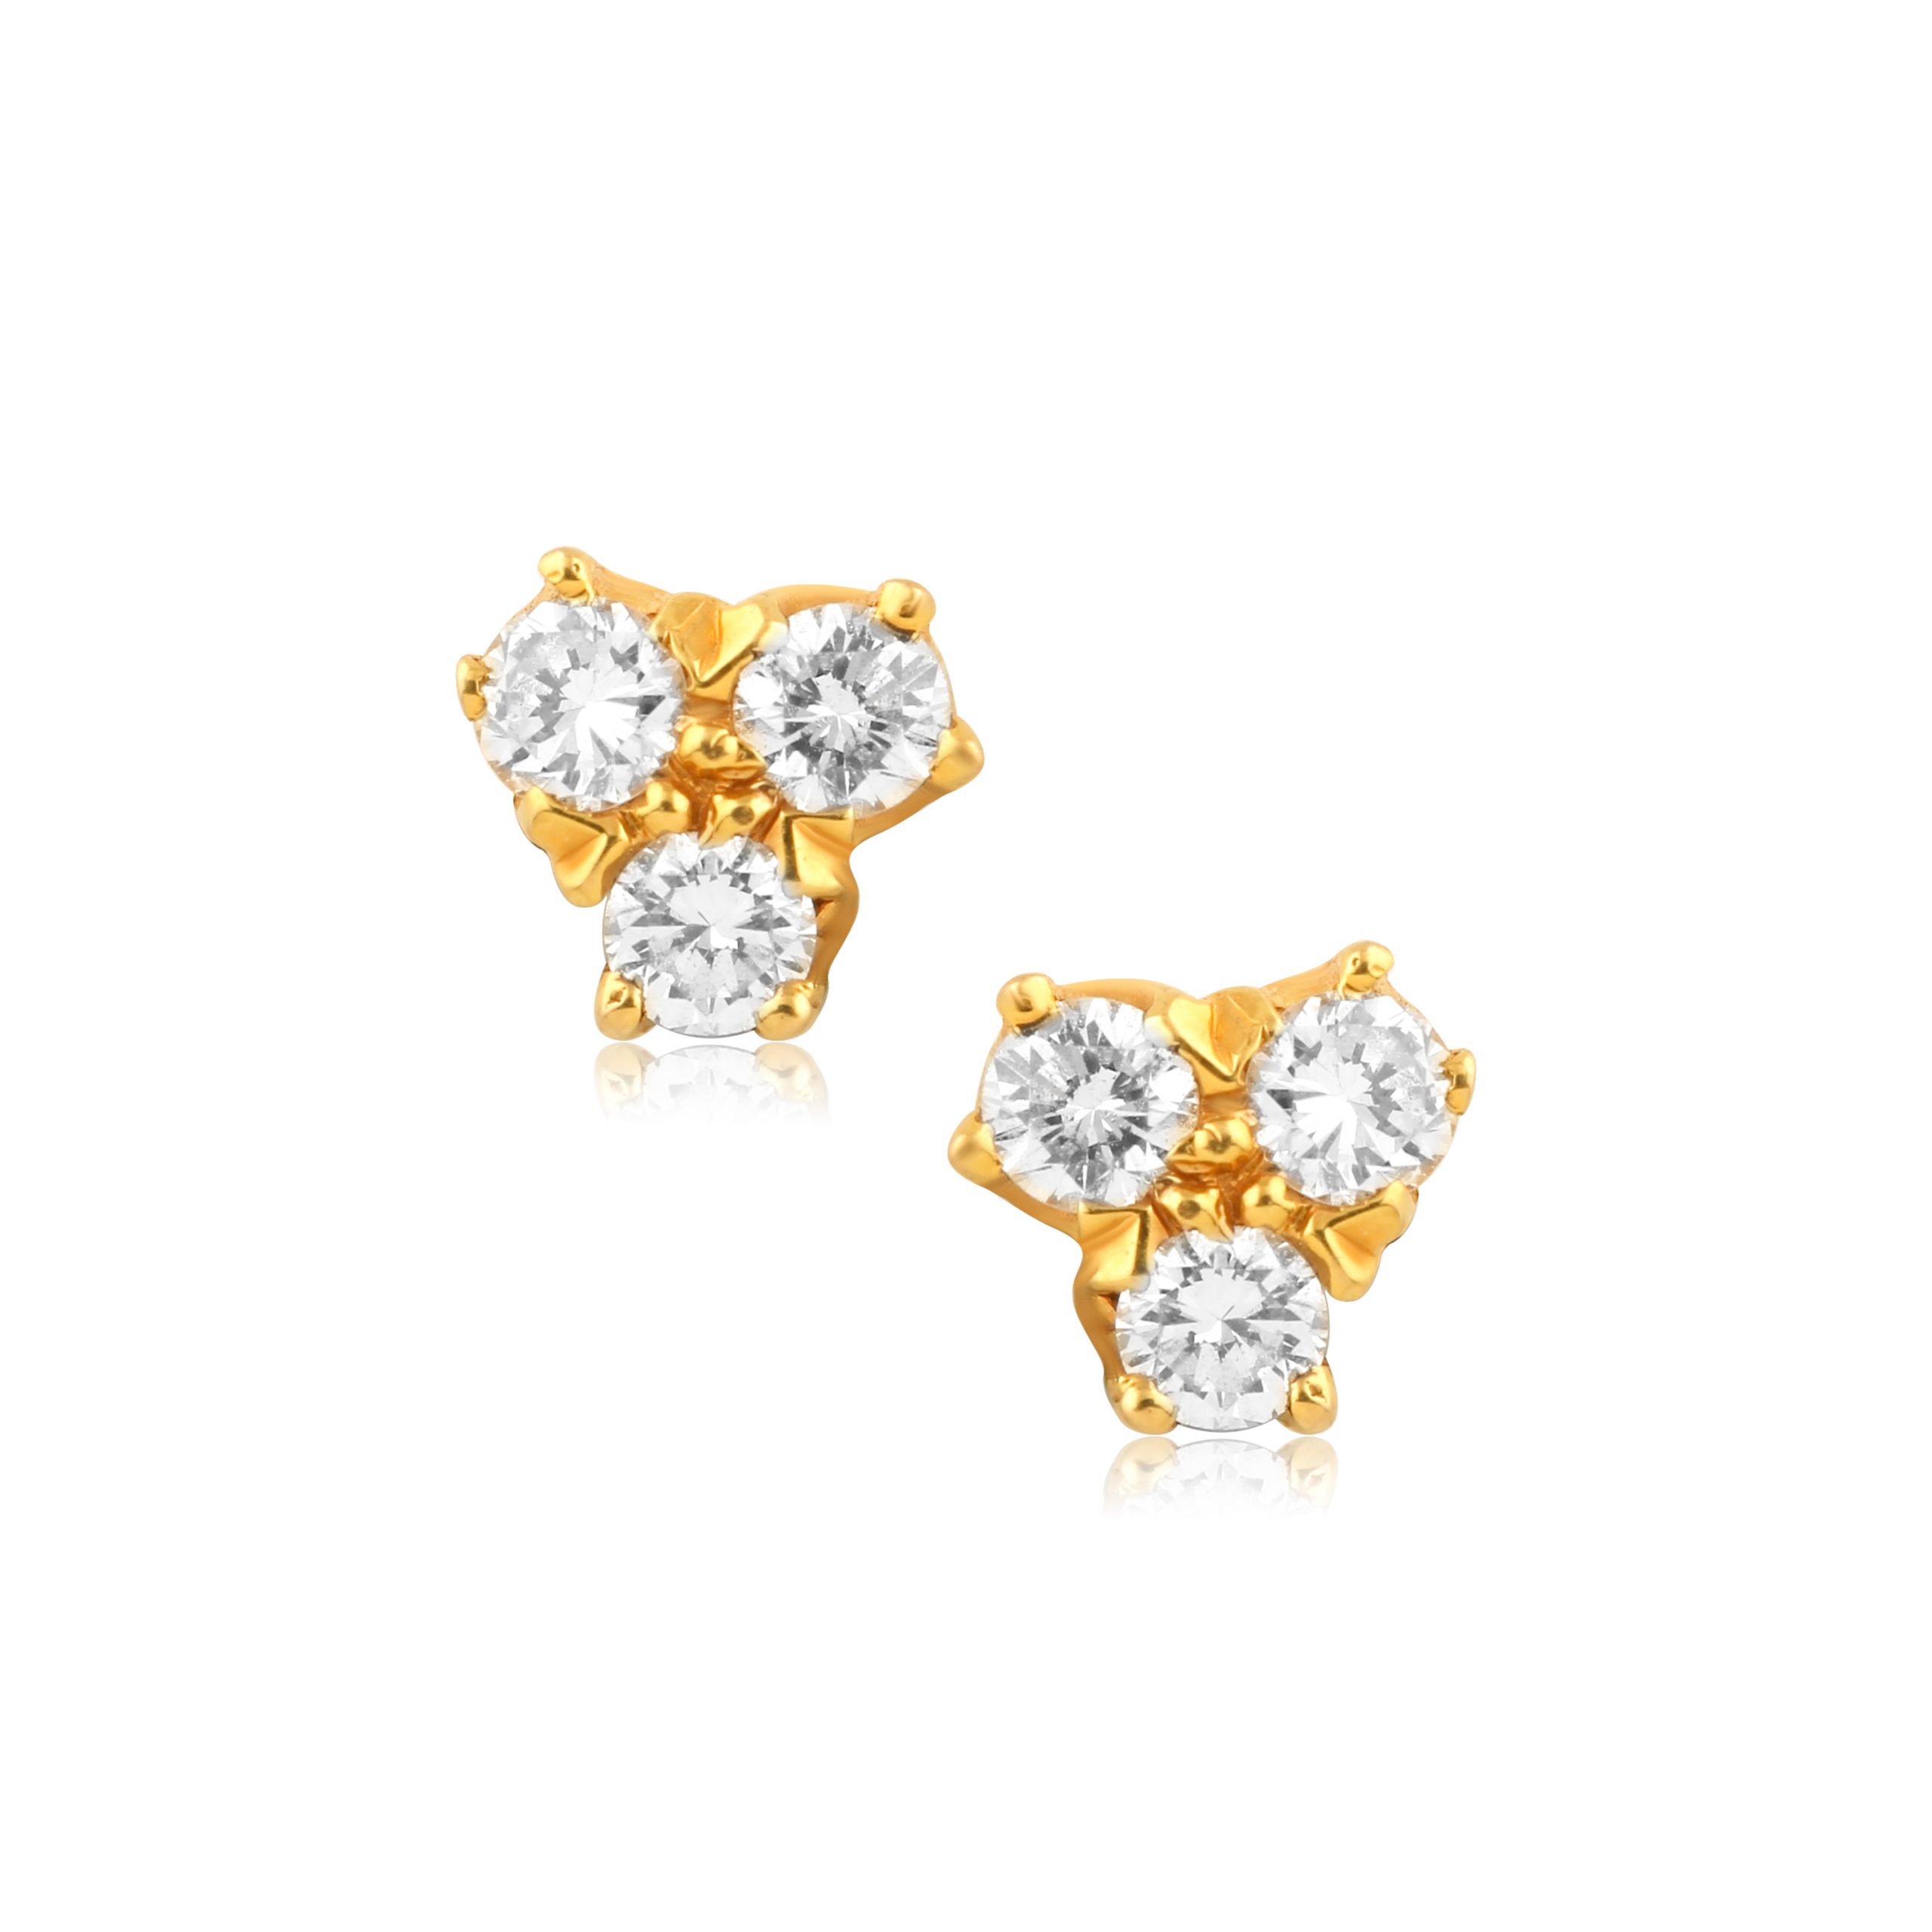 Contemporary 18 Kt Gold & Diamond Stud Earrings